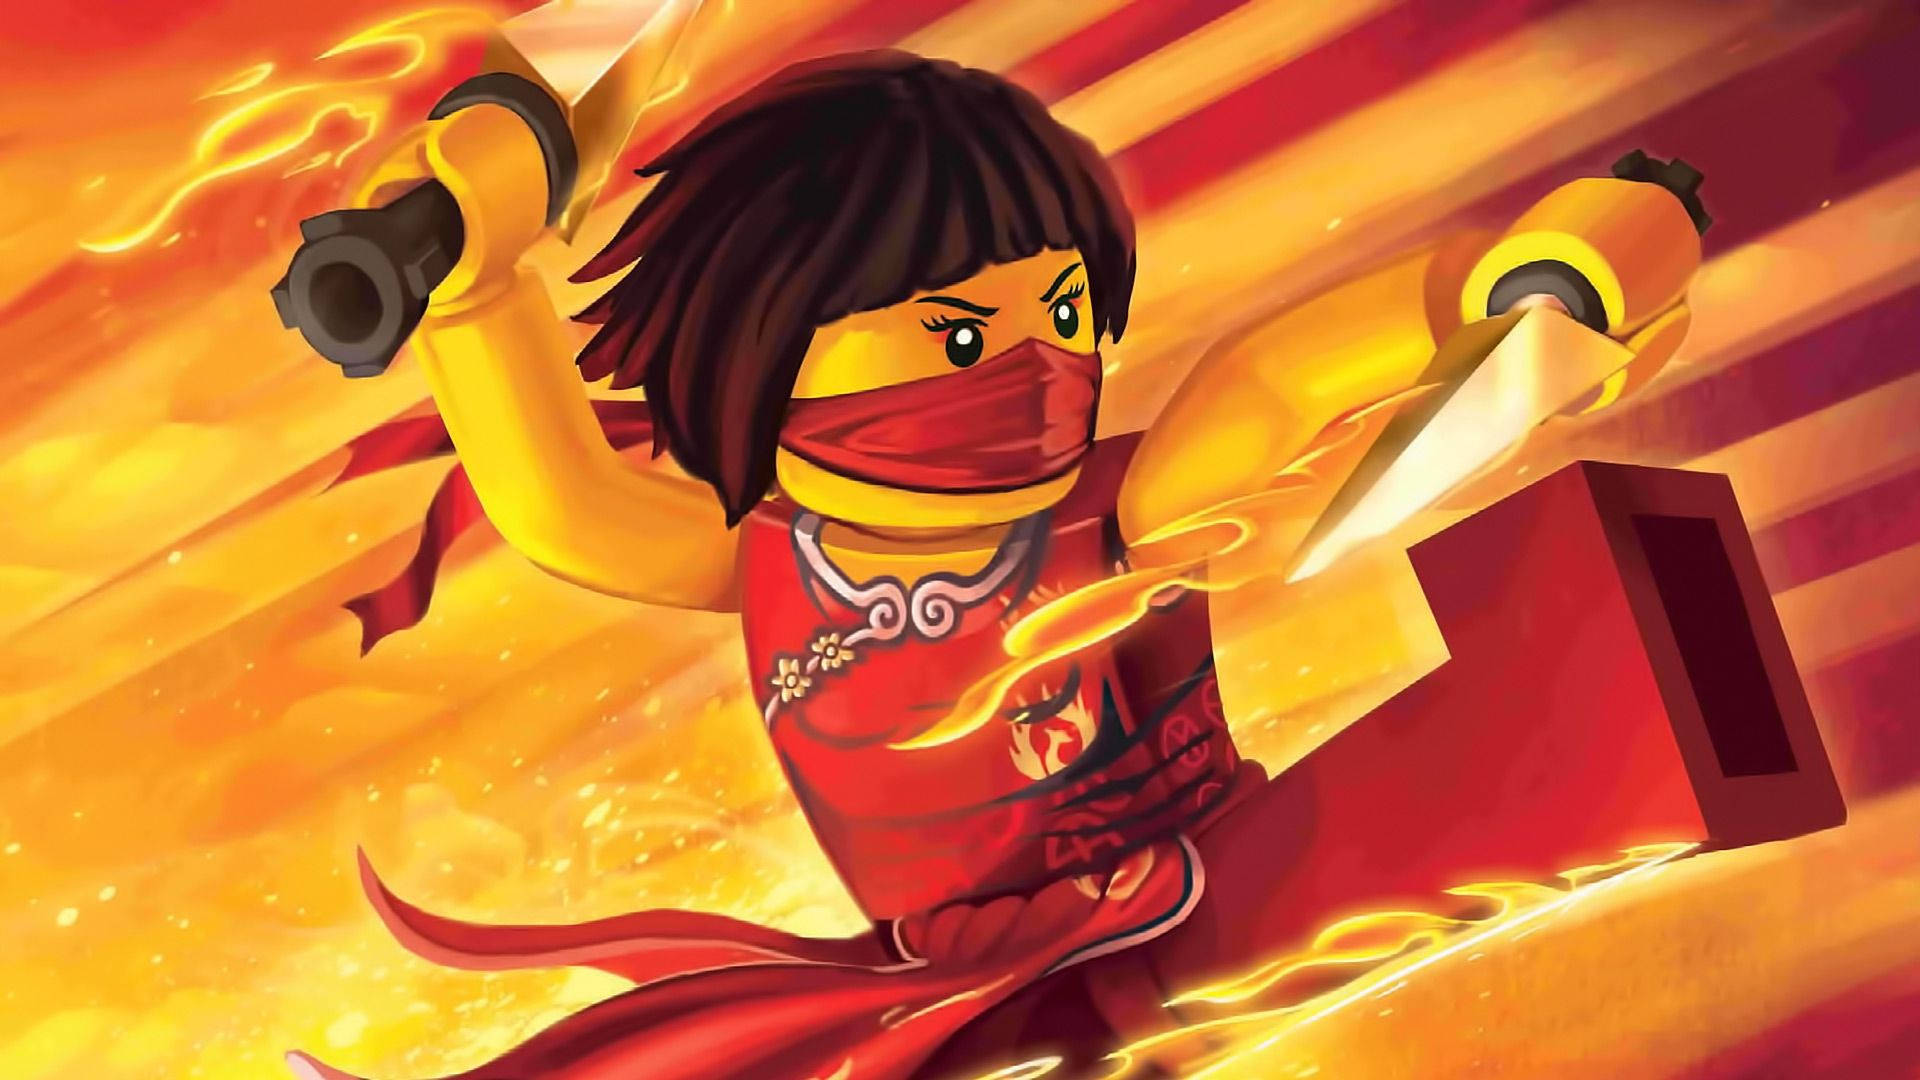 Top 999+ Lego Ninjago Wallpaper Full Hd, 4K✓Free To Use